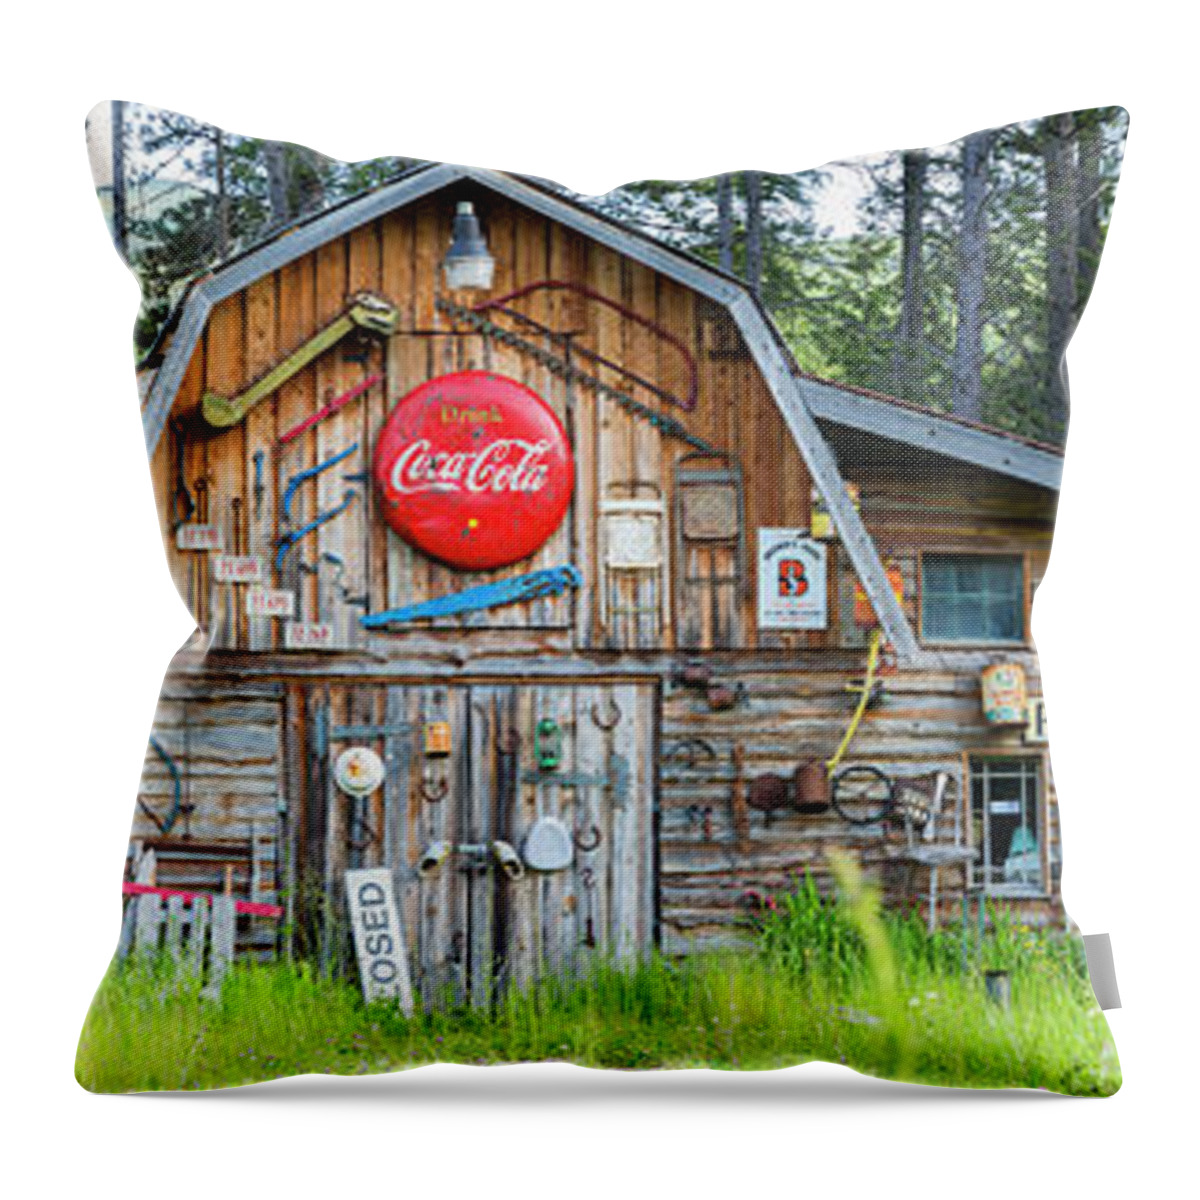 Panoramic Throw Pillow featuring the photograph Old Americana Barn, Montana, Usa by Peter Adams